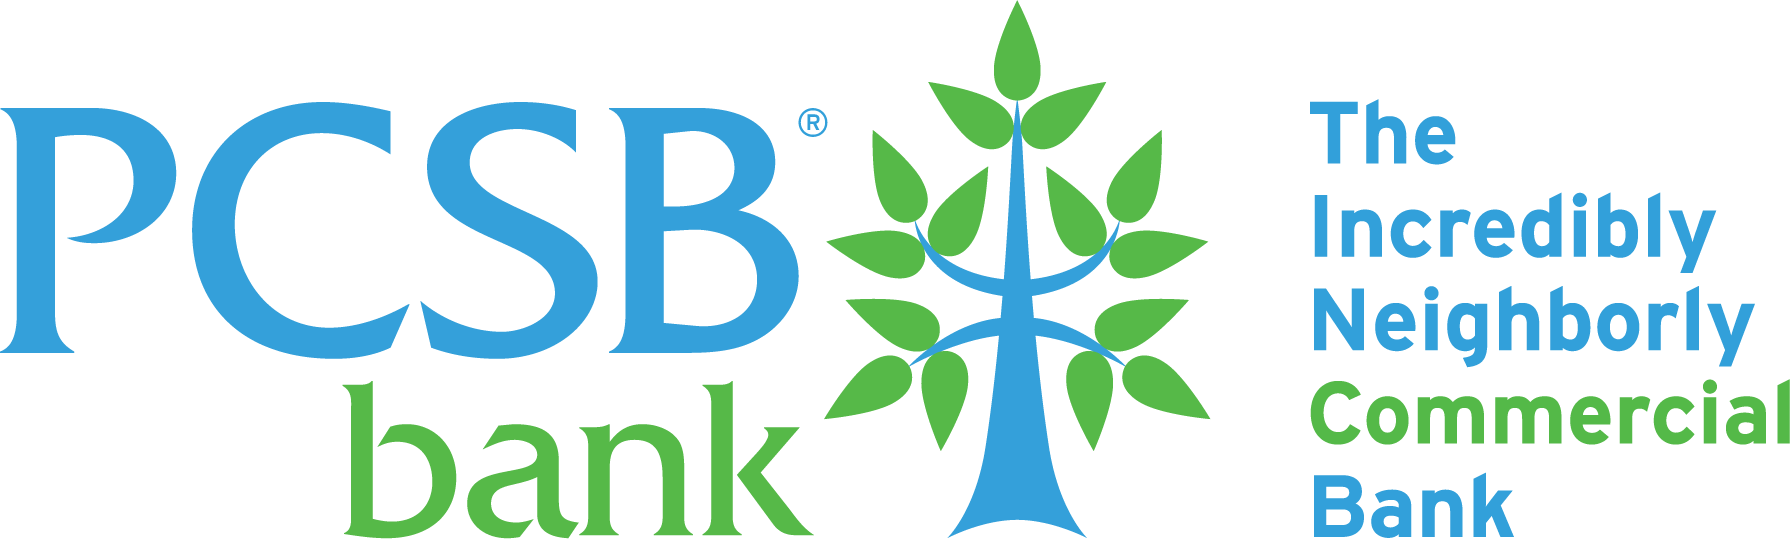 PCSB Bank | New York Bank | Banking Services | Accounts | Loans